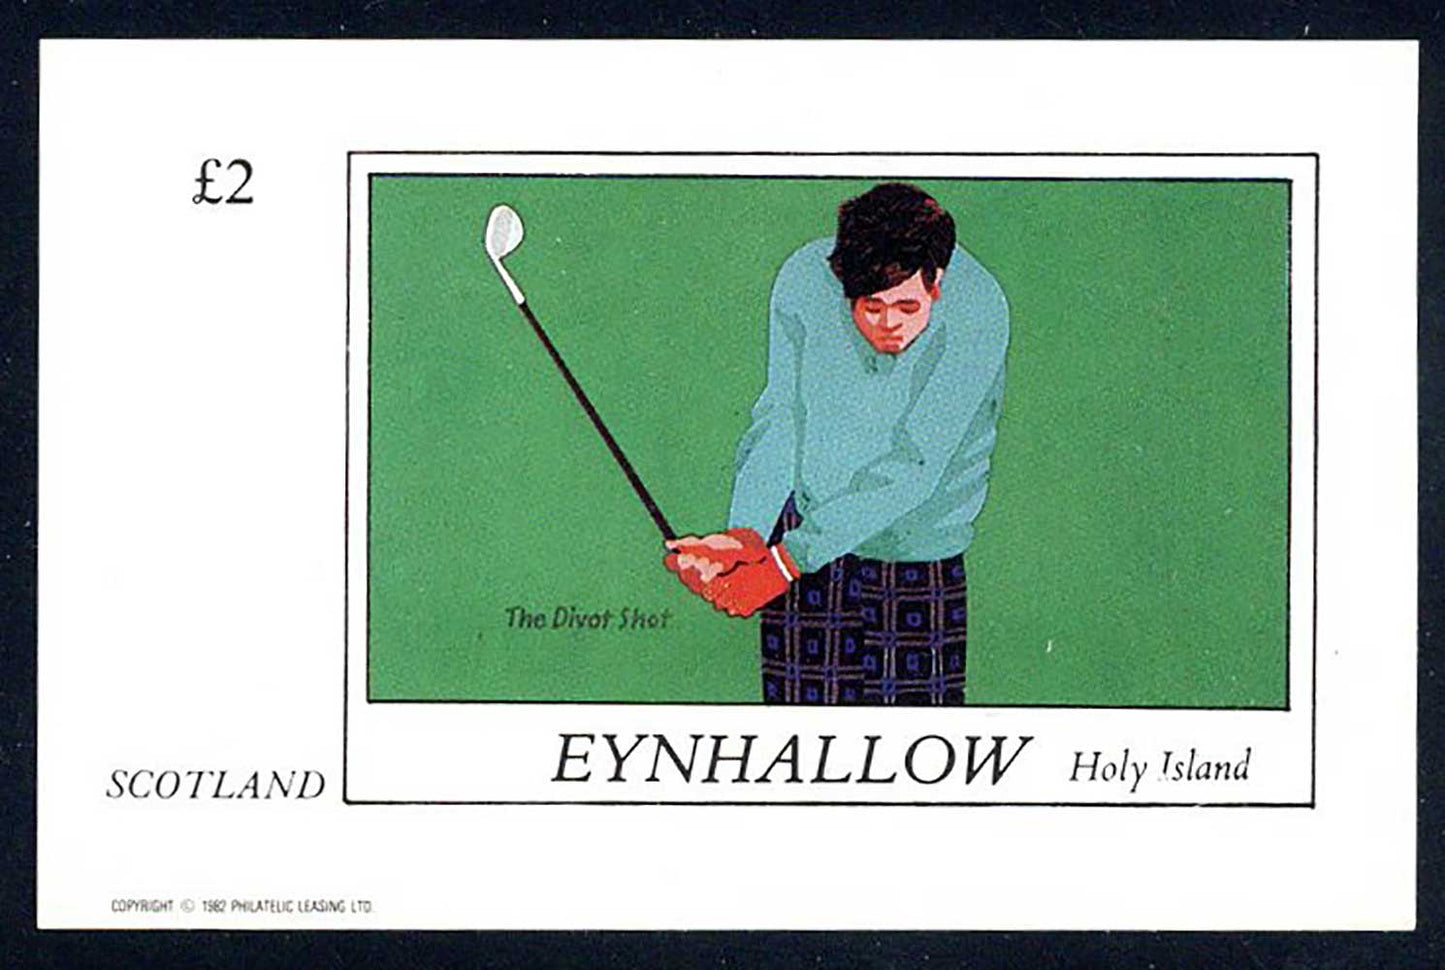 Eynhallow Golf £2